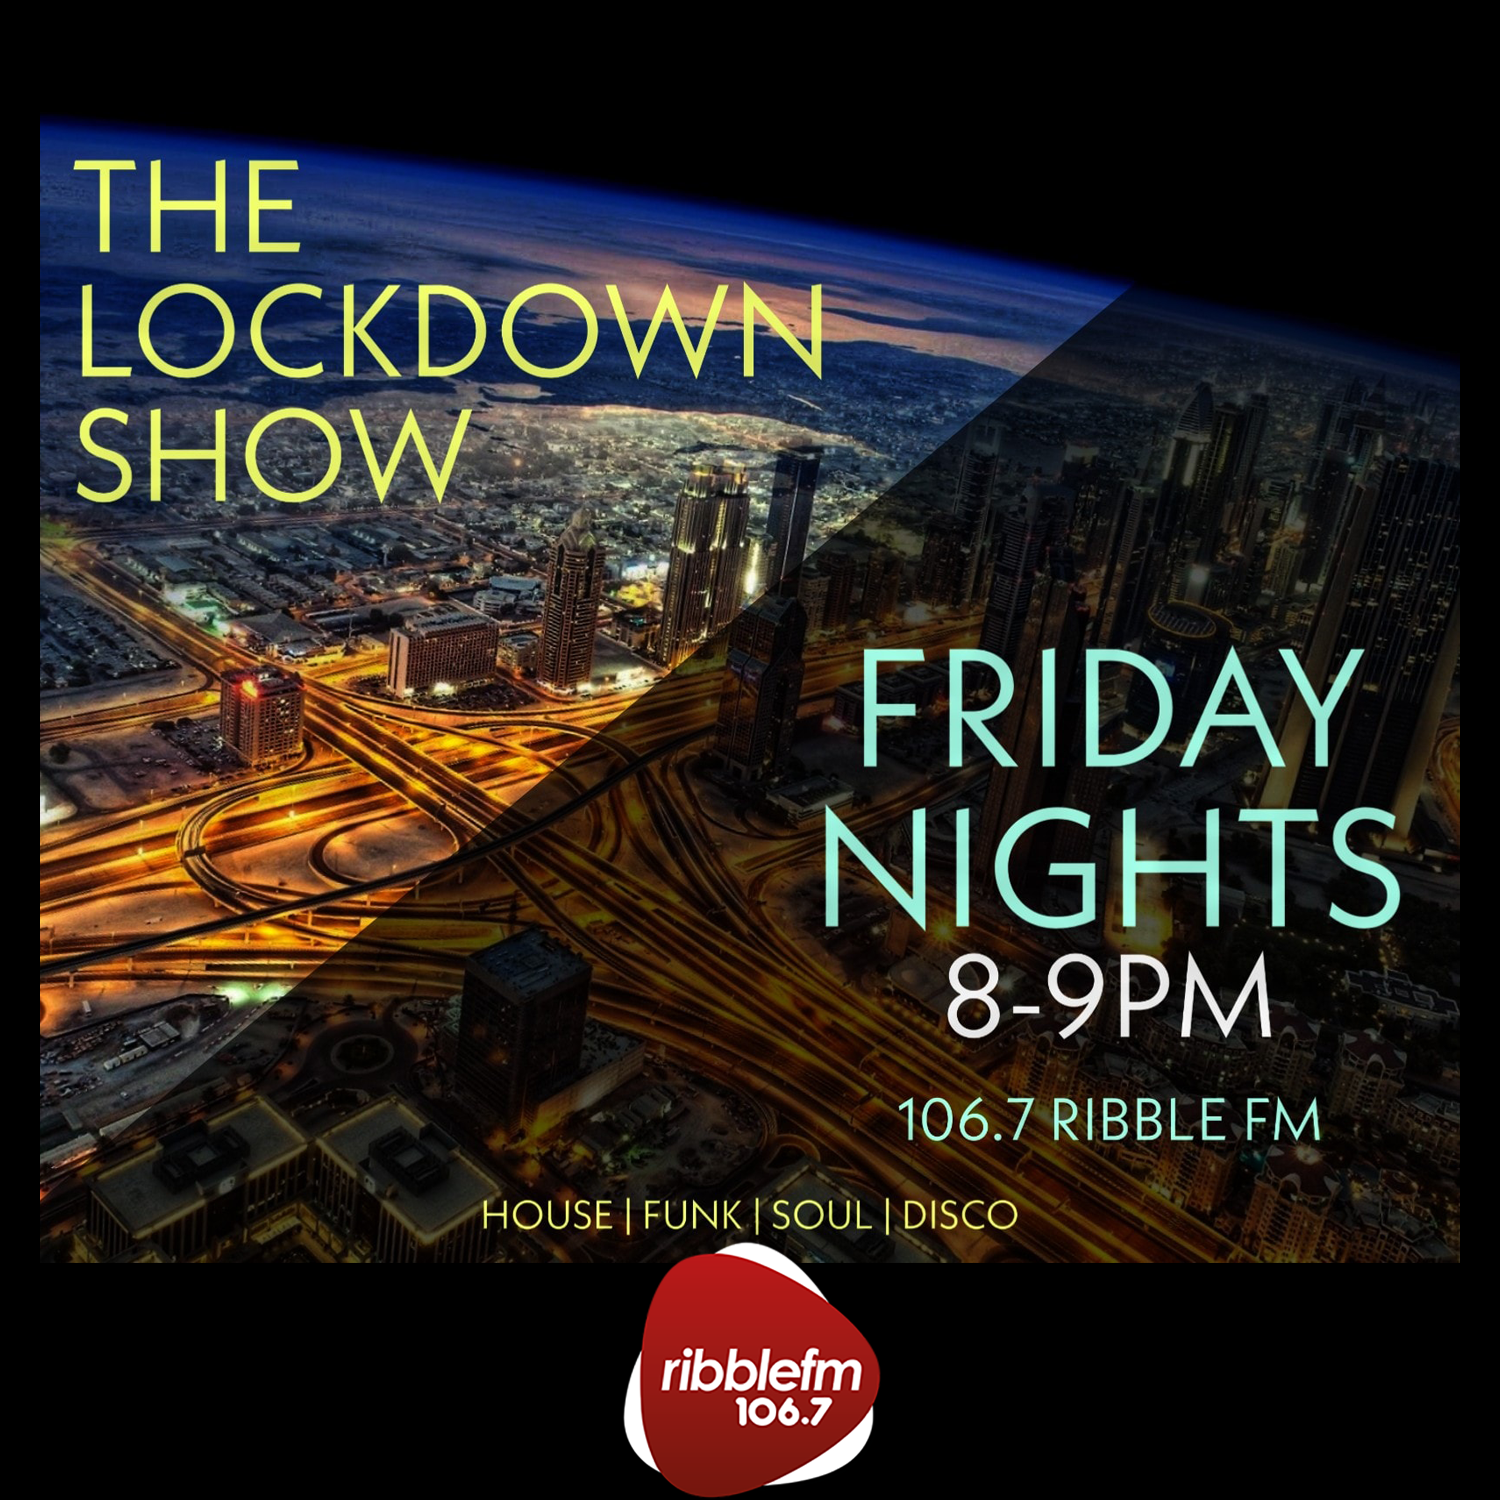 The Lockdown Radio Show